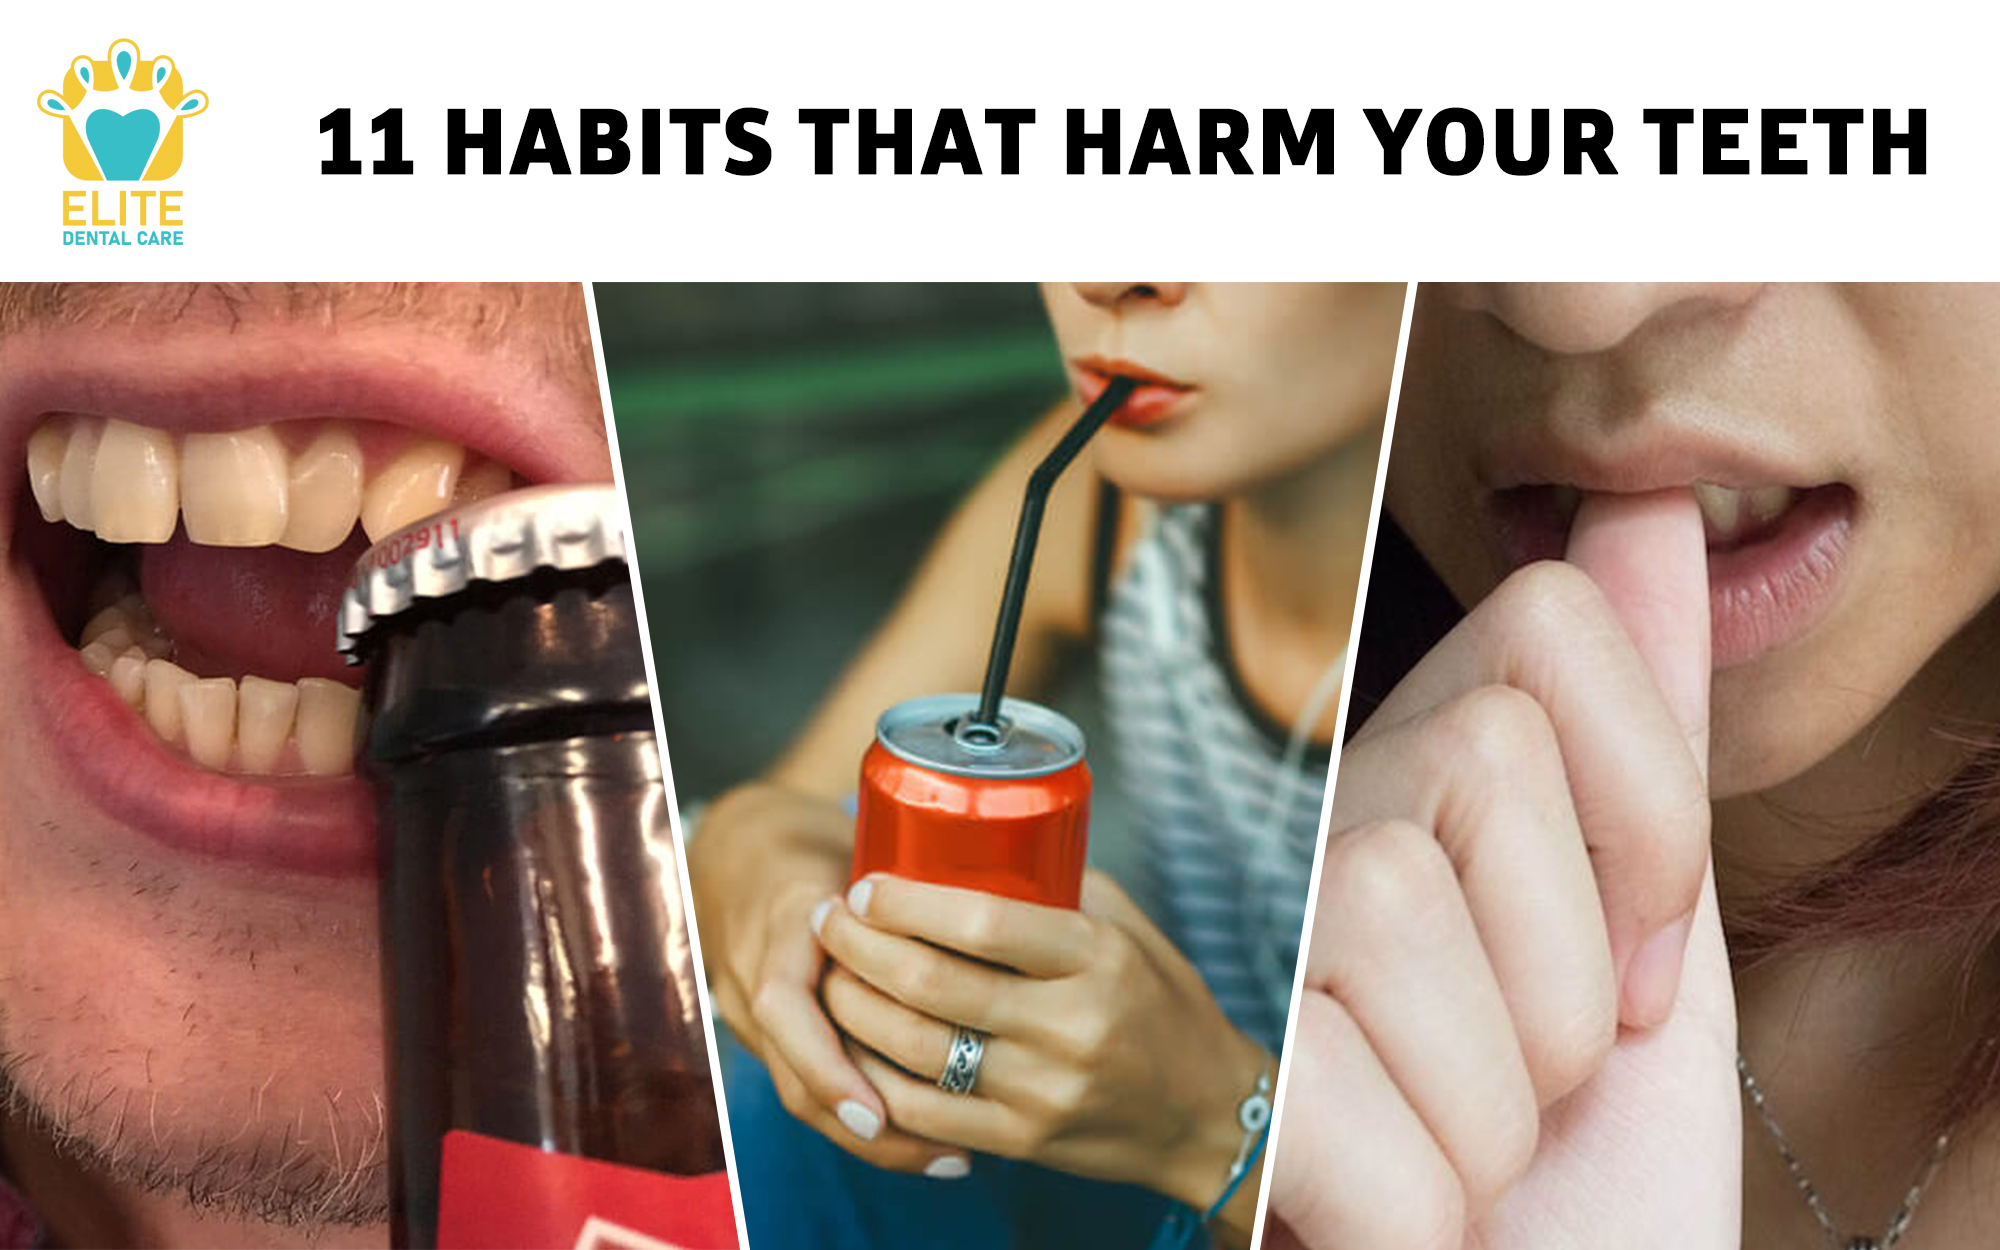 11 HABITS THAT HARM YOUR TEETH